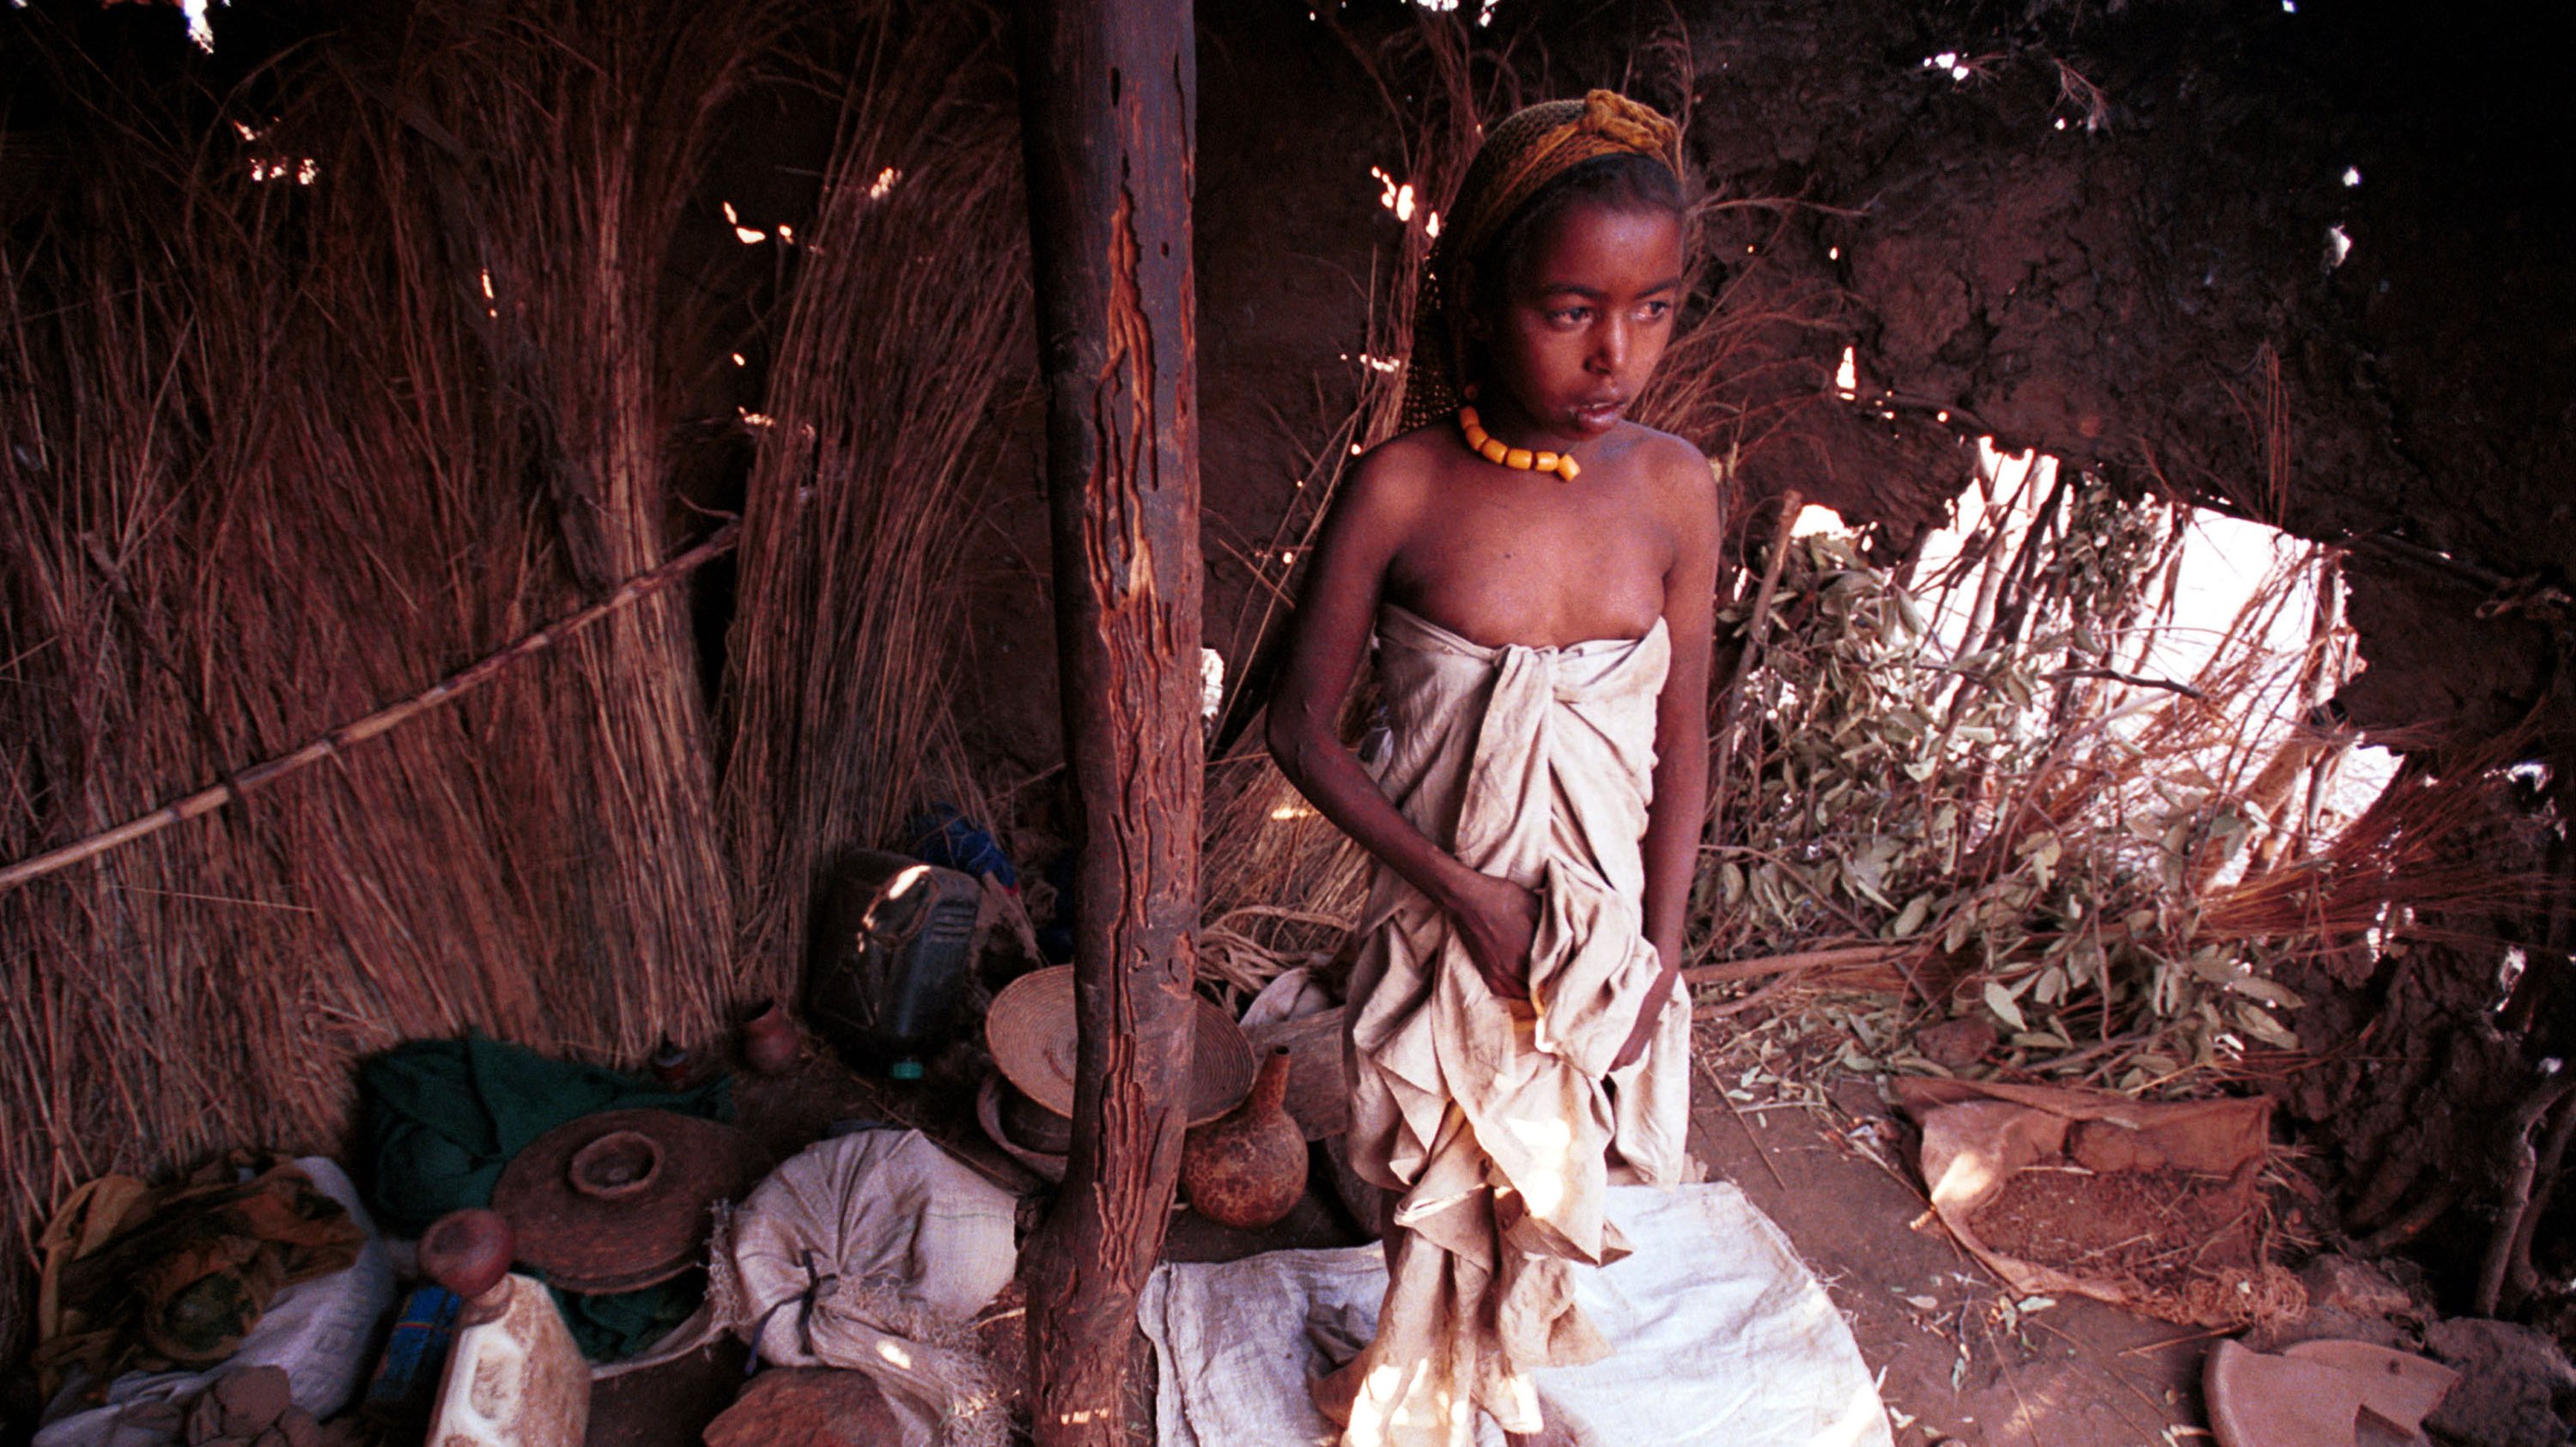 Rural Ethiopia Confronts Genital Mutilation Practice